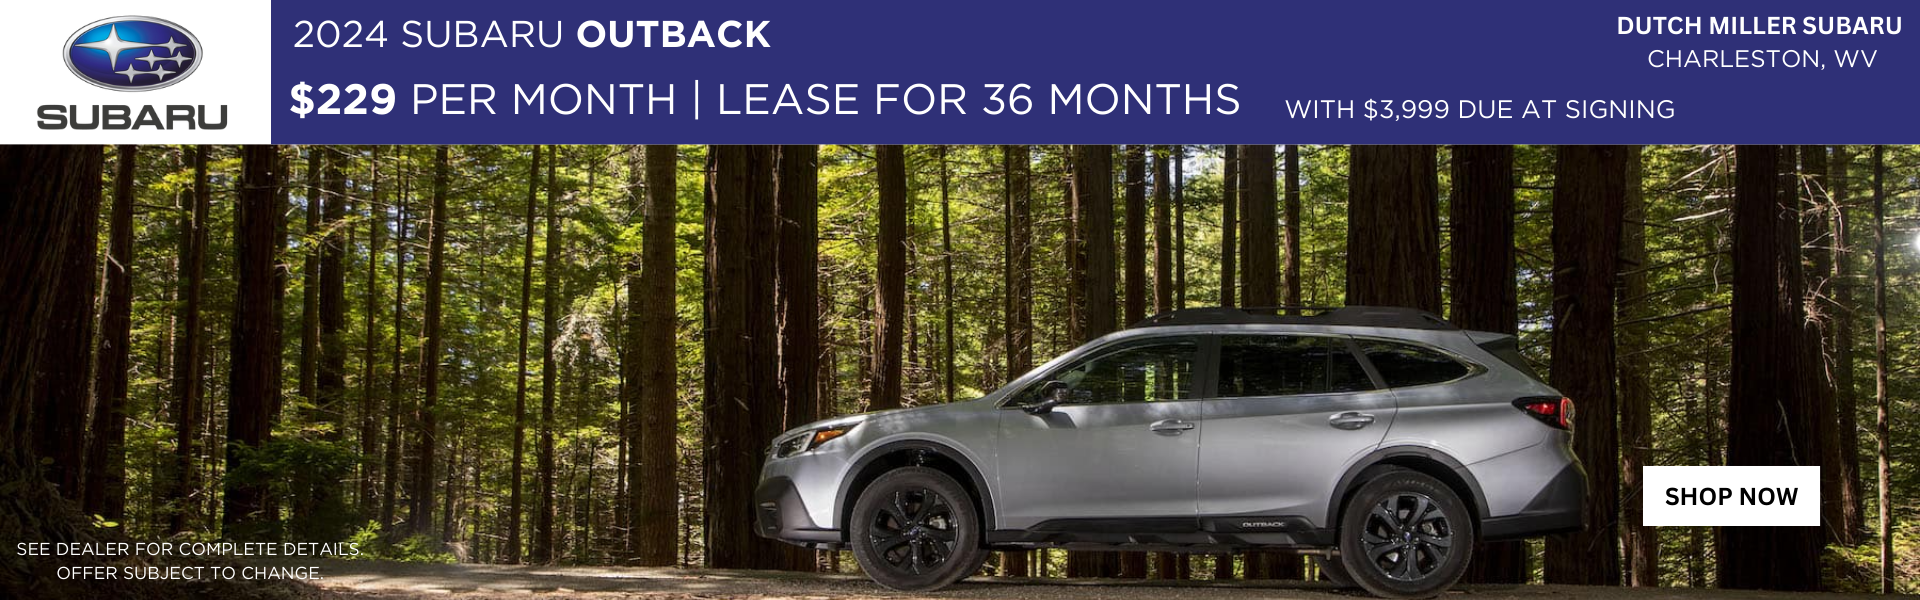 2023 Subaru outback lease special